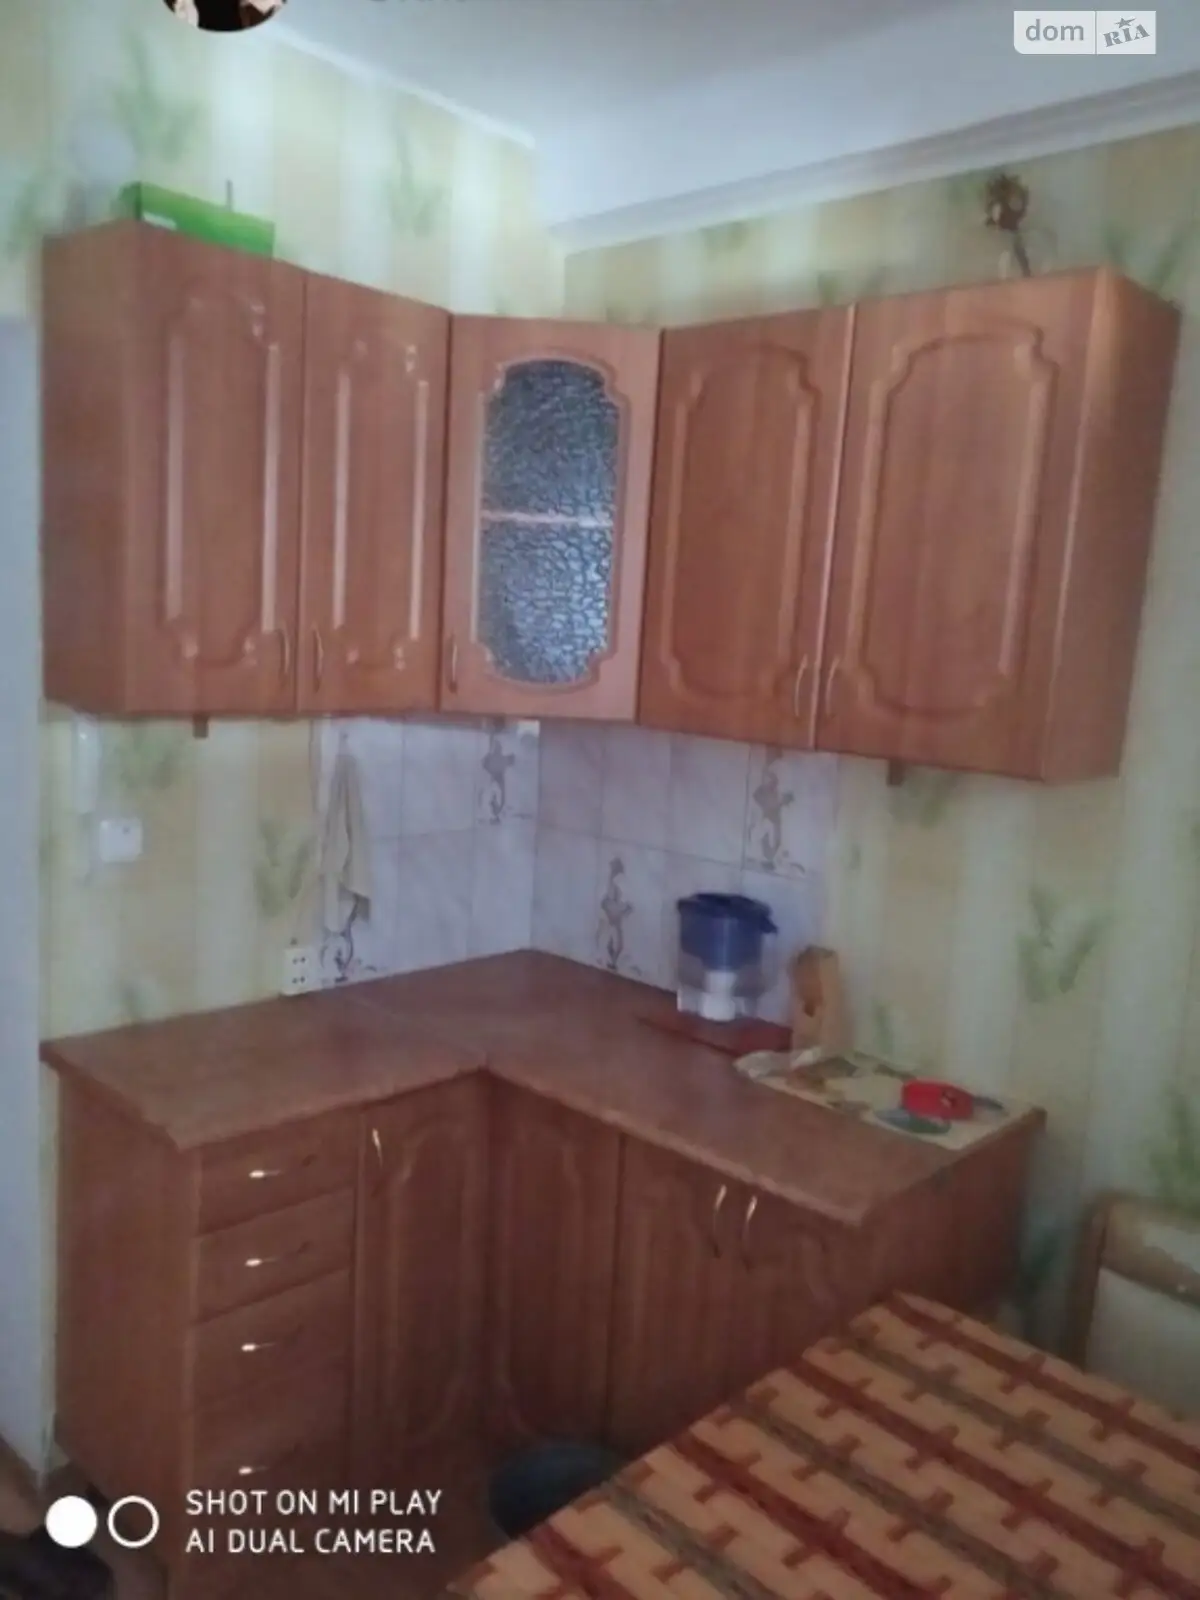 Продается комната 16 кв. м в Одессе, цена: 9500 $ - фото 1